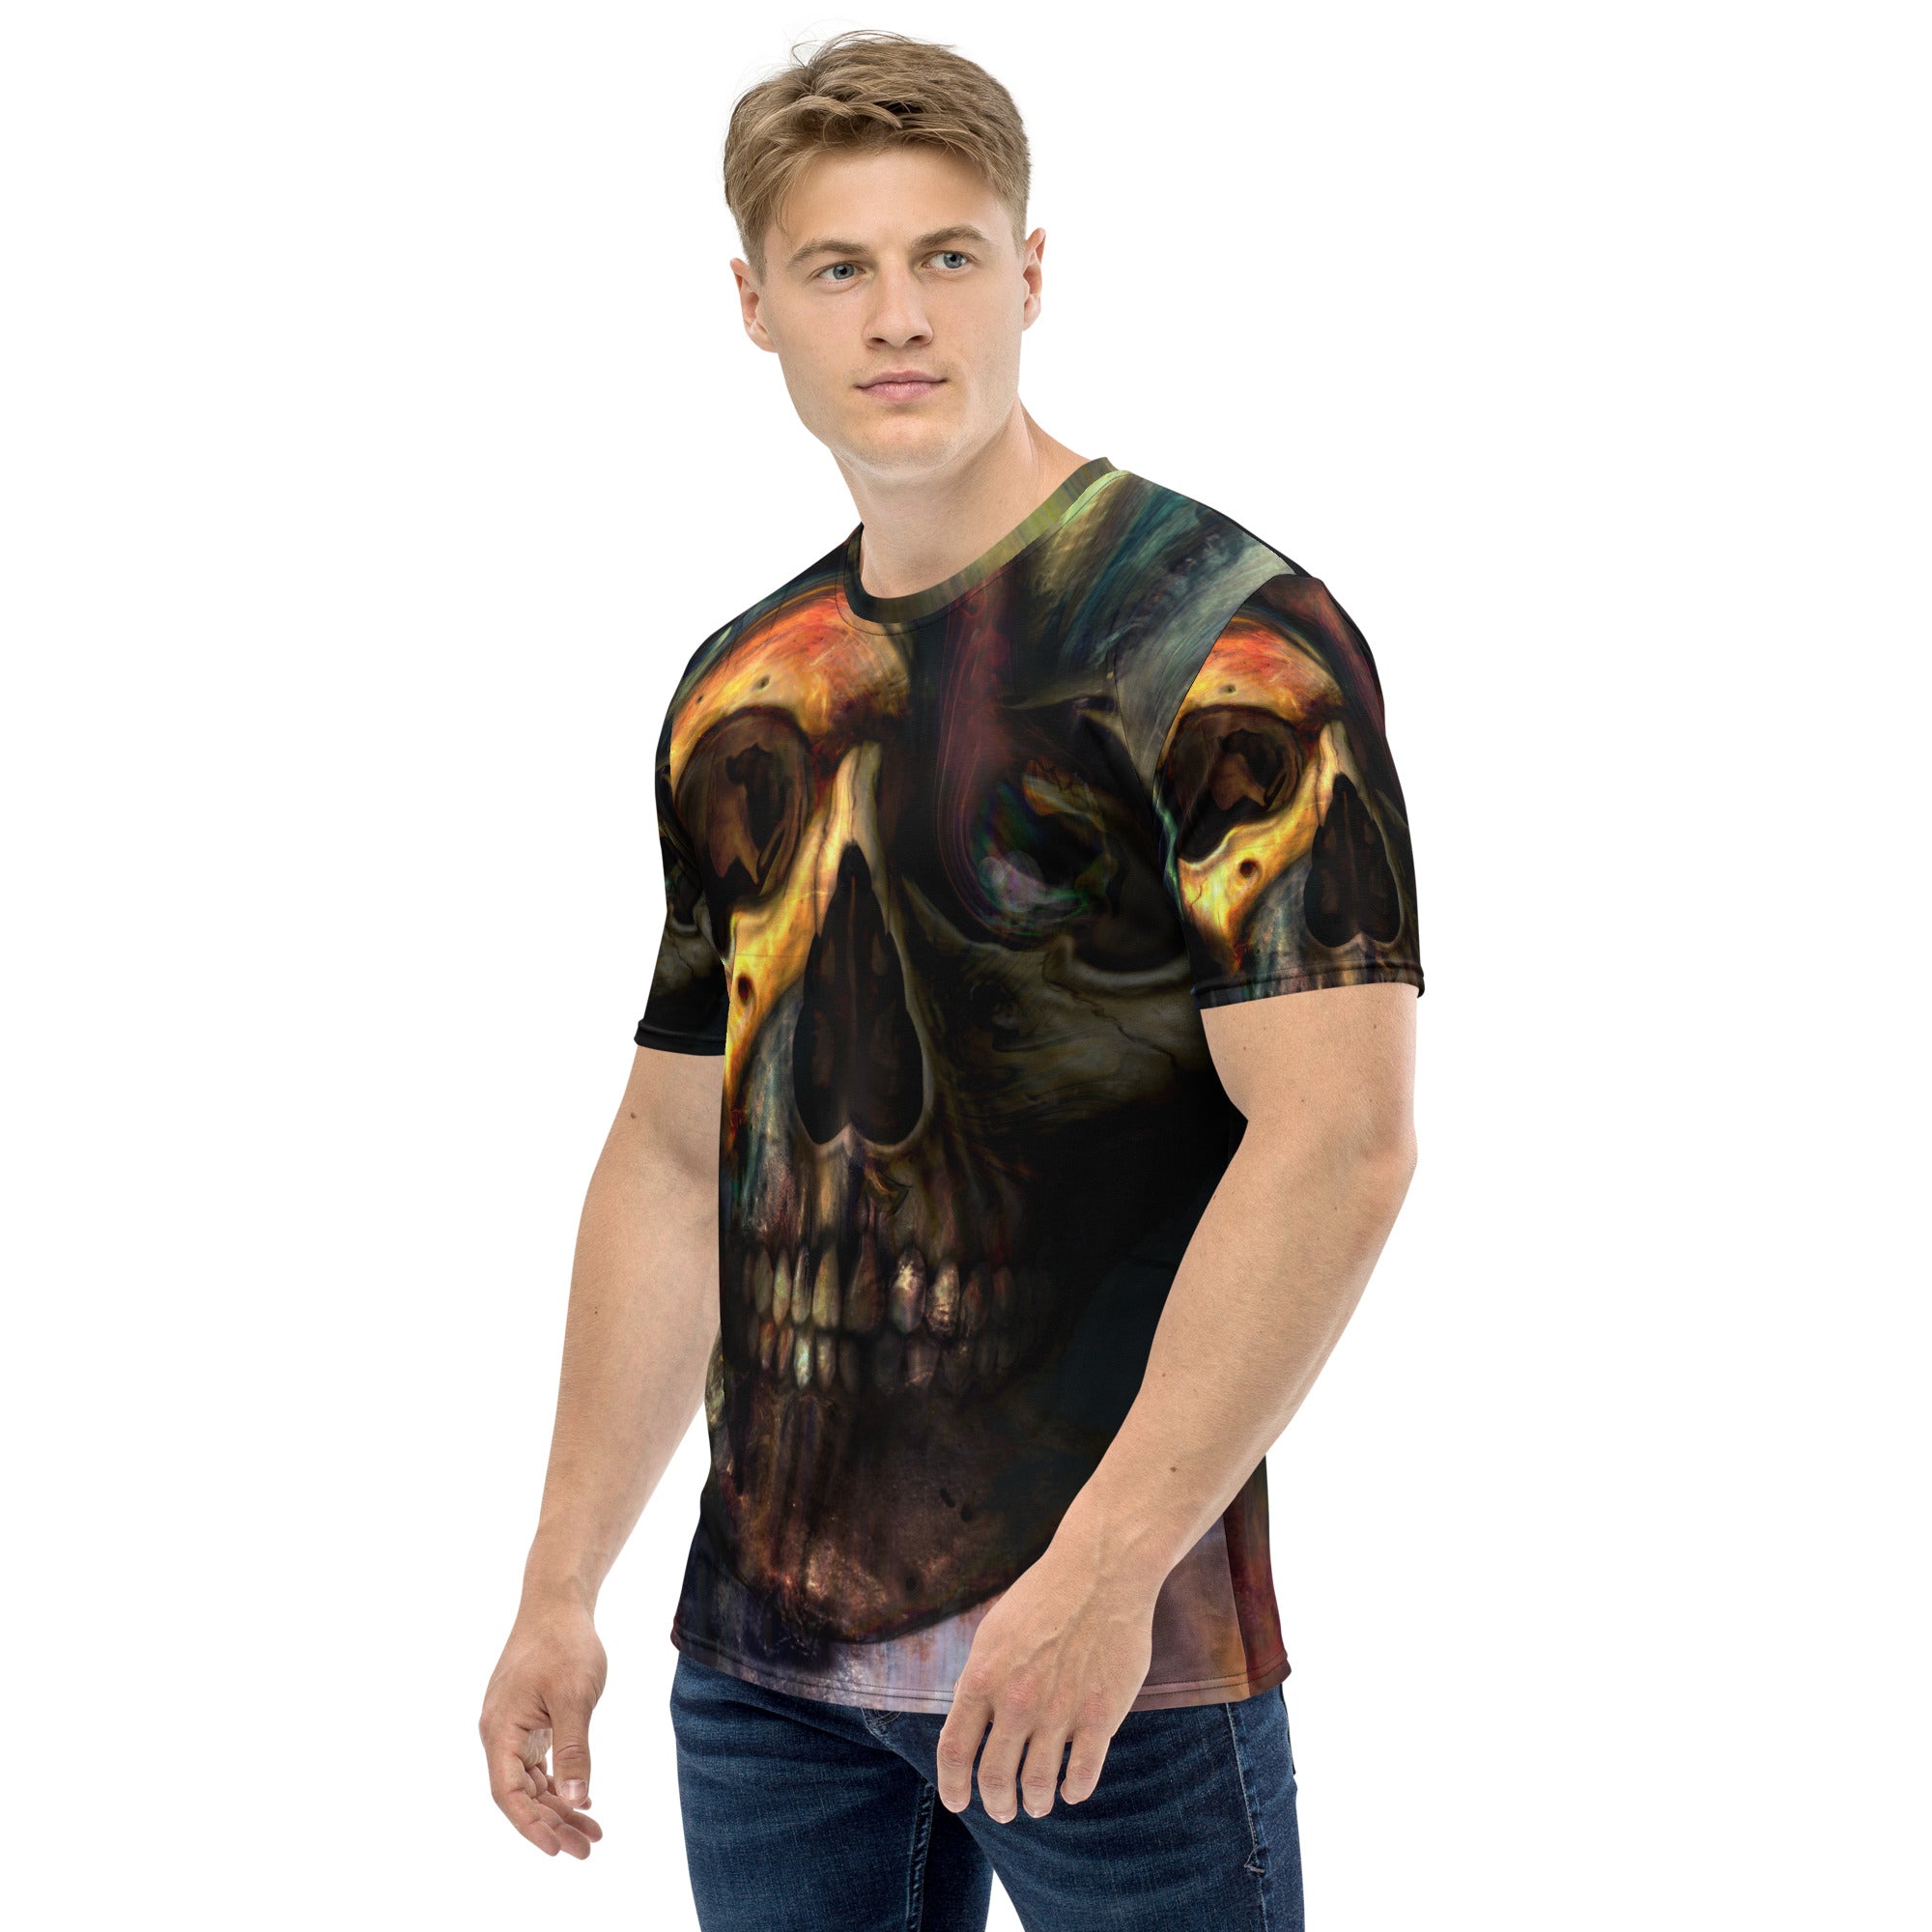 Skull Painted T-shirt